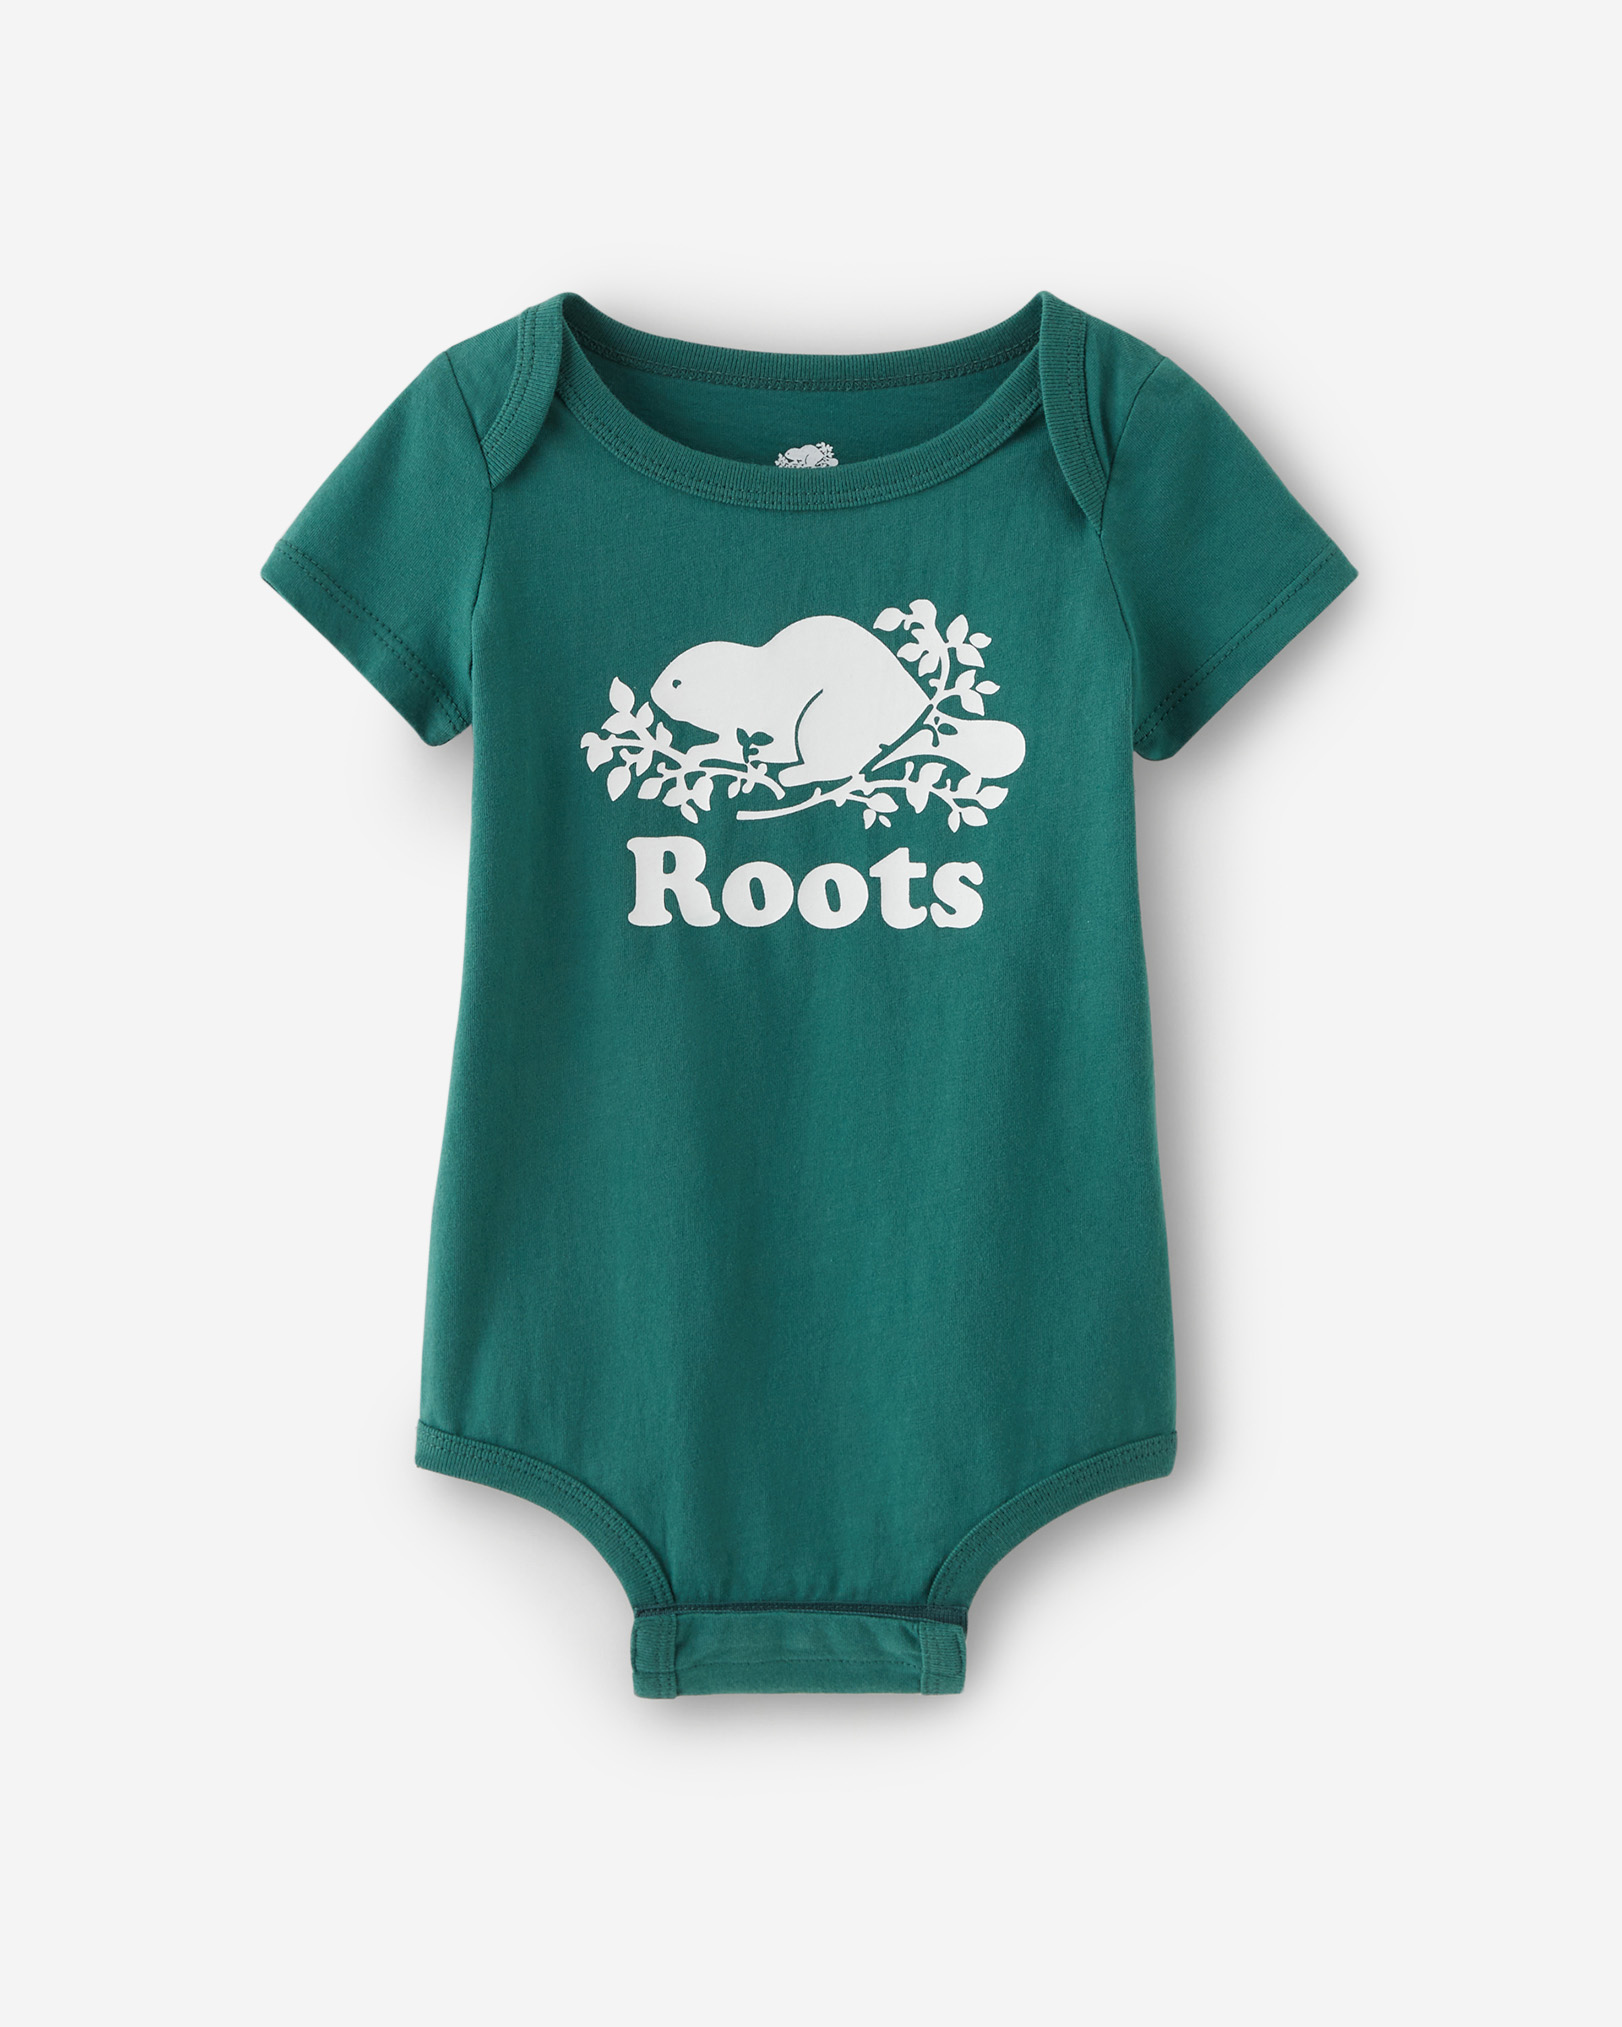 Roots Baby Cooper Beaver Bodysuit in Smoke Pine